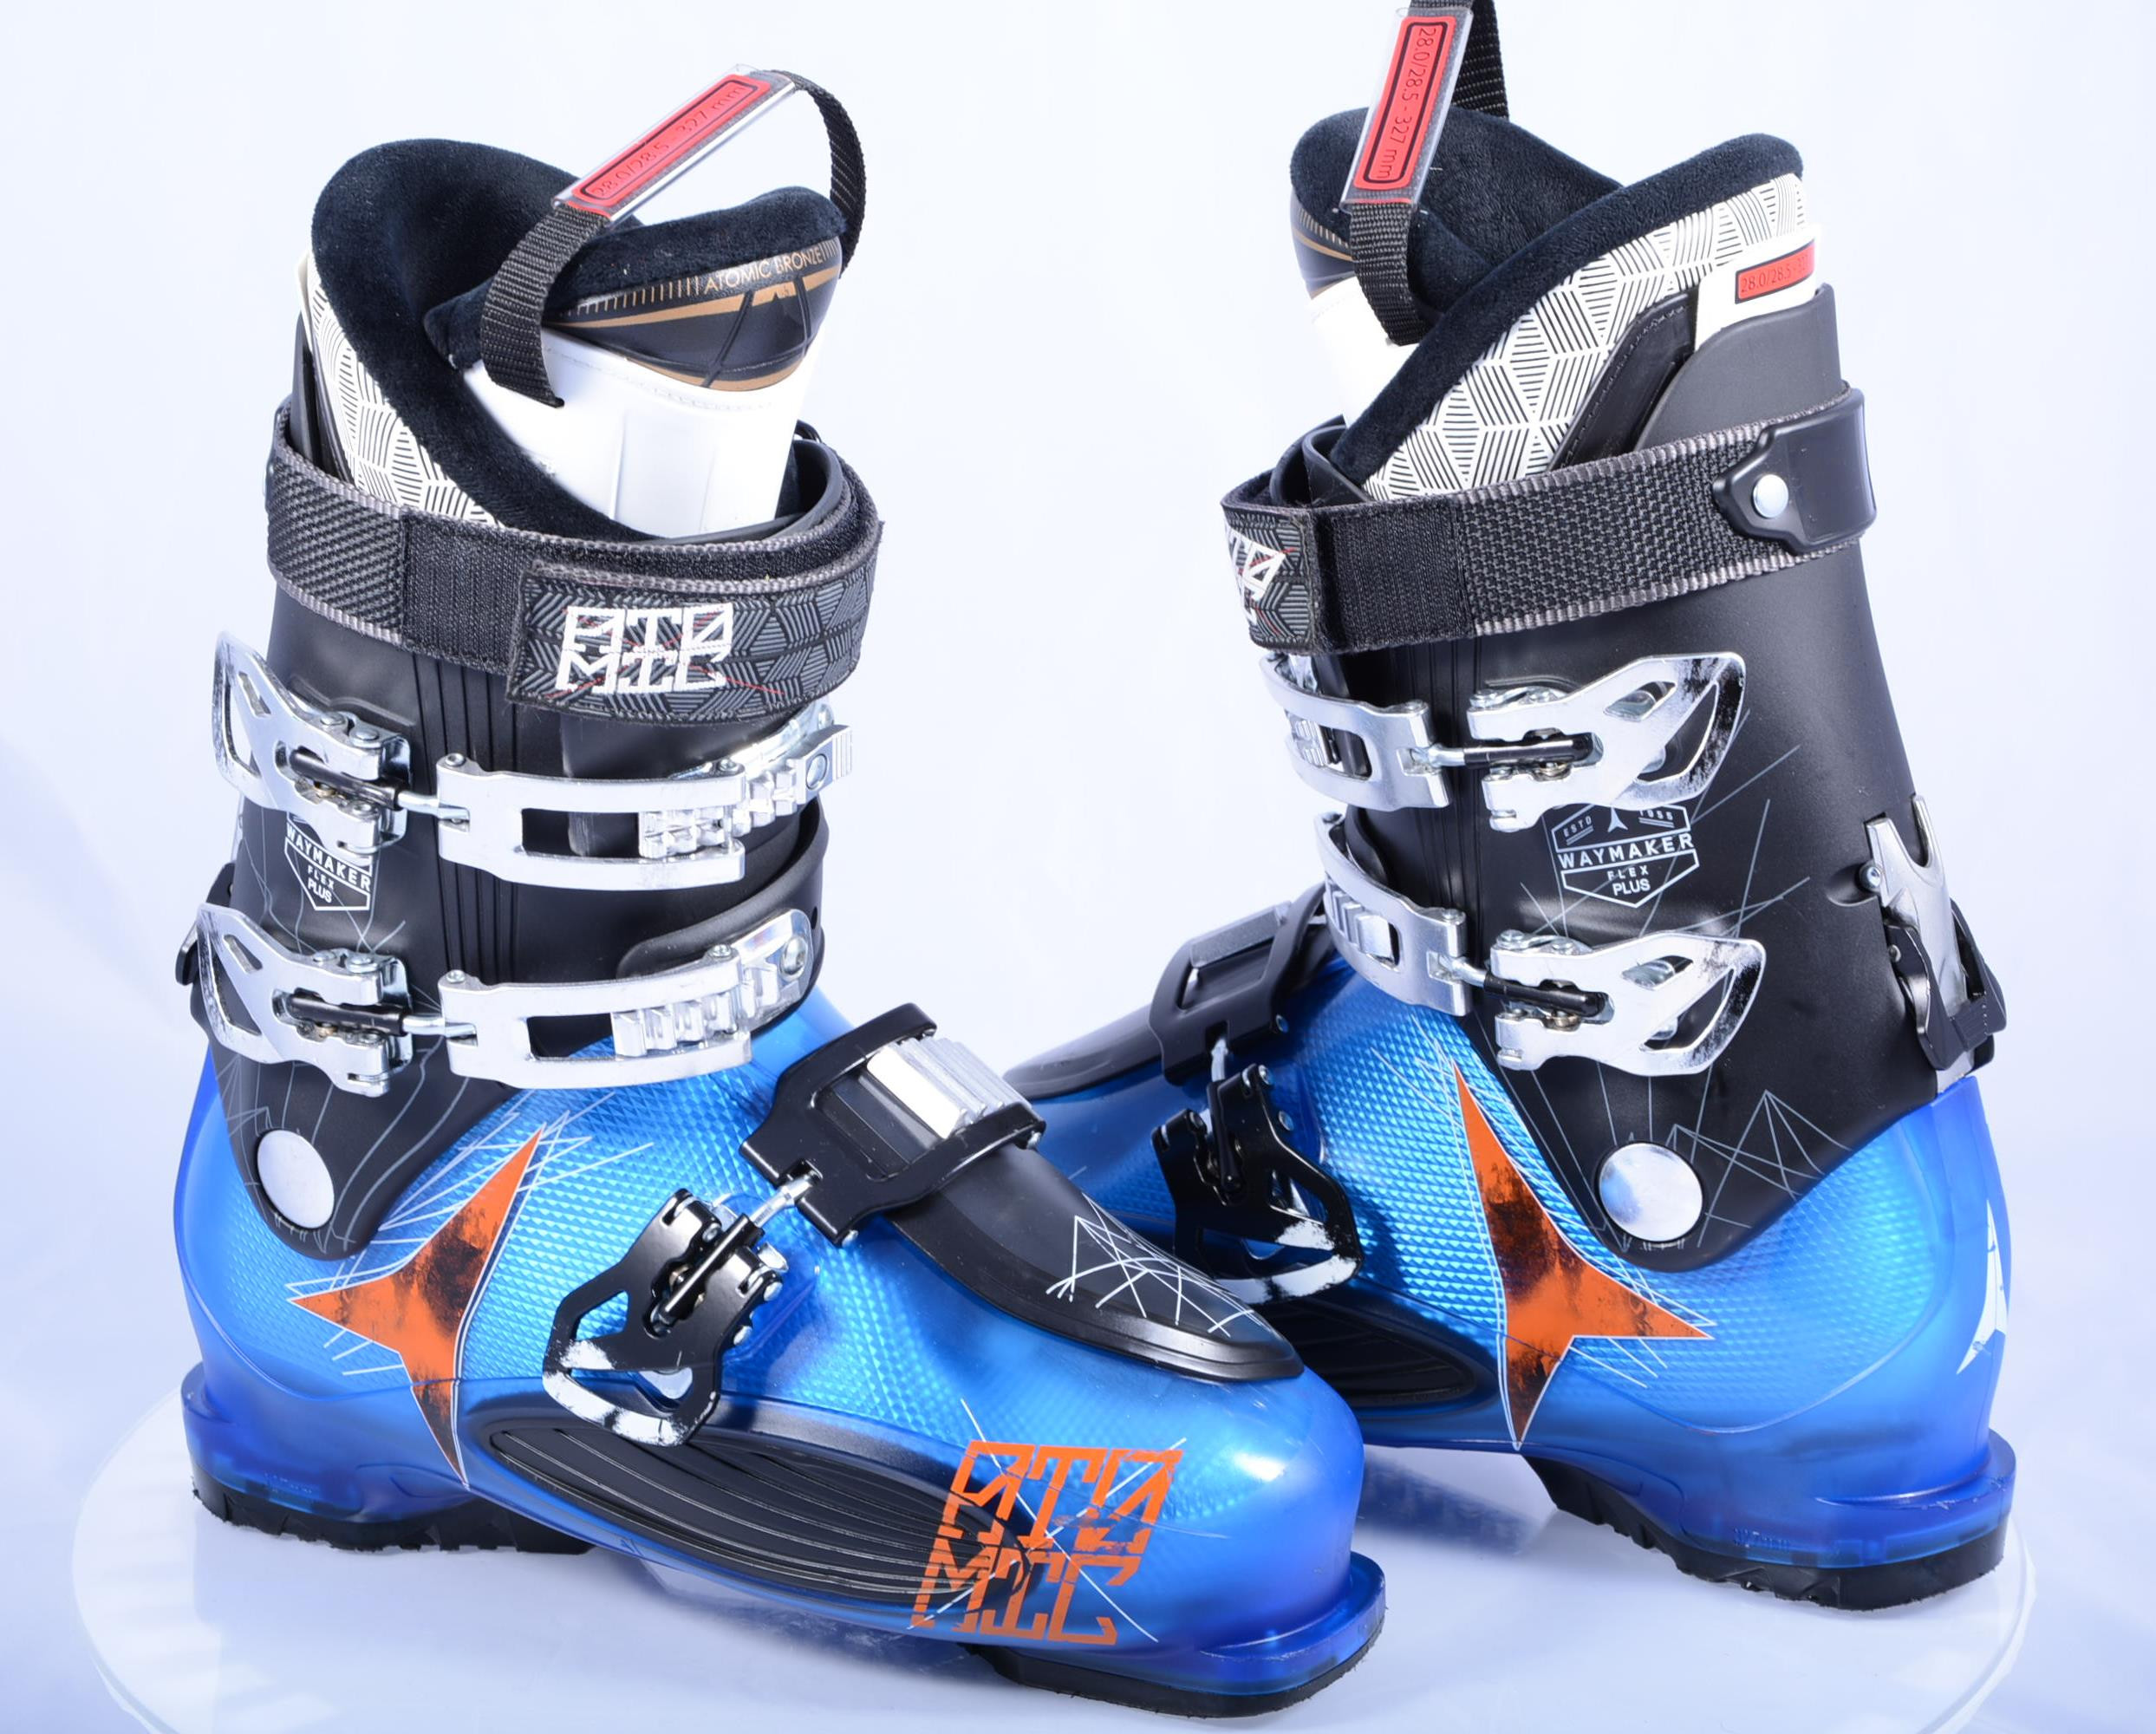 288 mm ski boot size